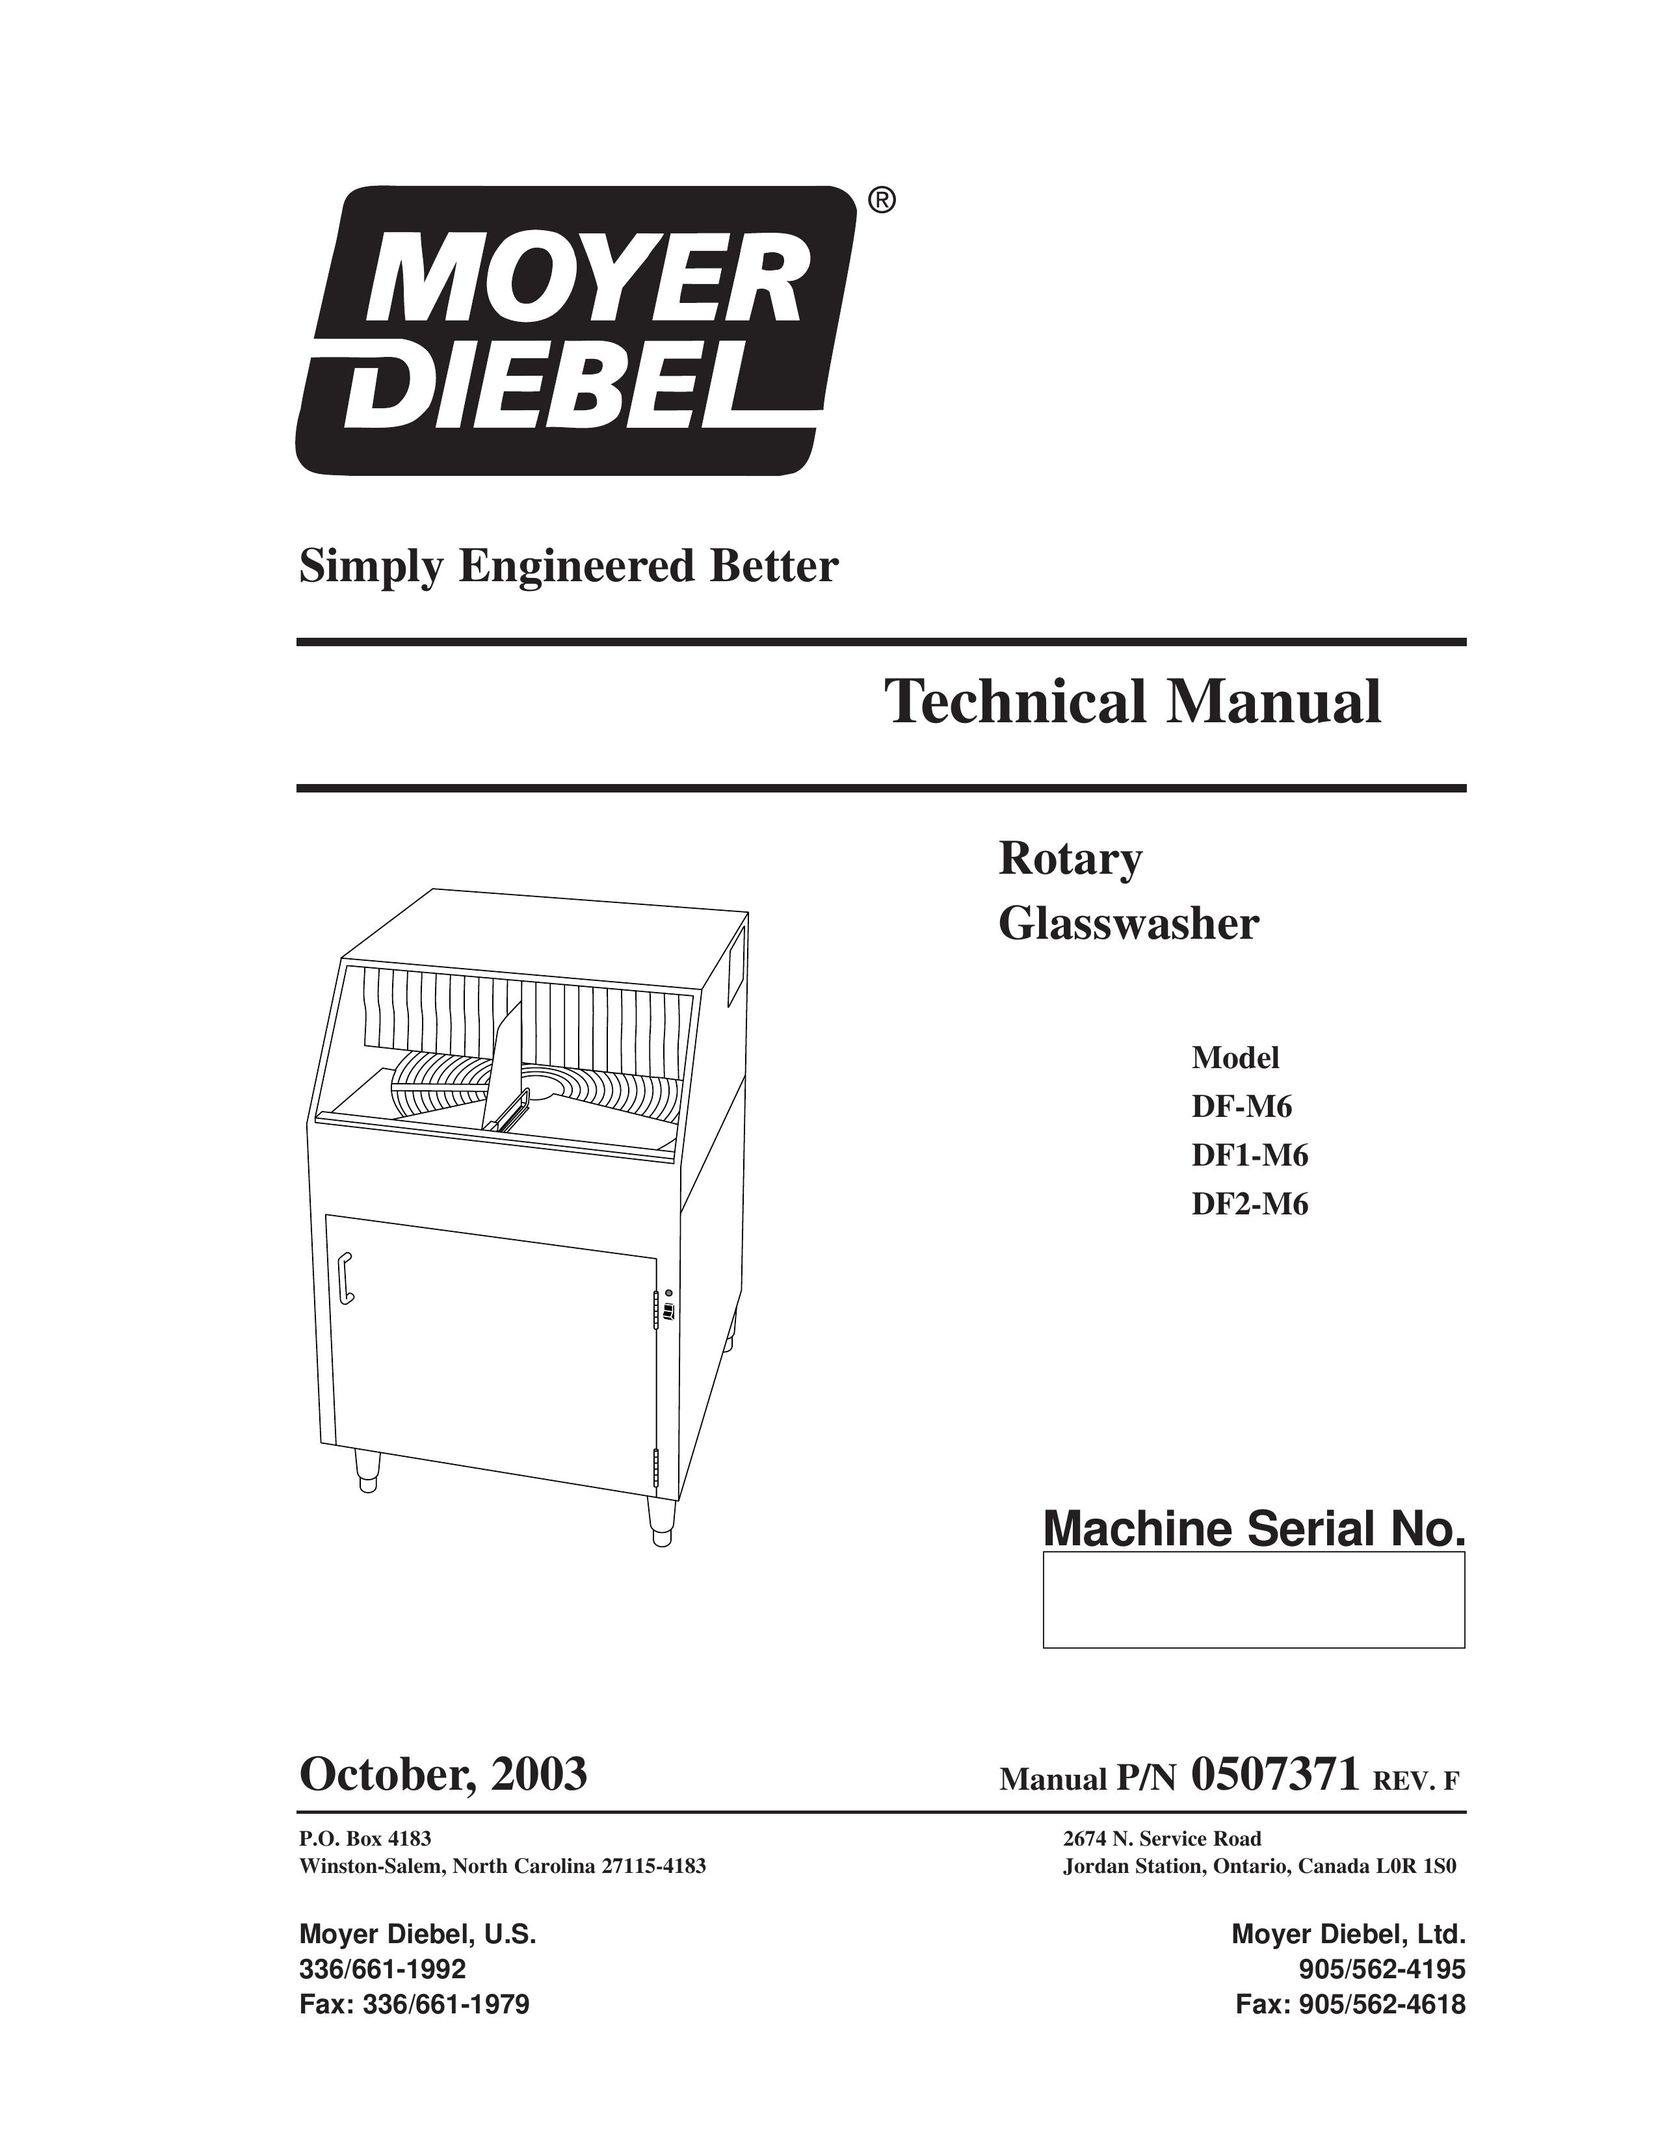 Moyer Diebel DF2-M6 Dishwasher User Manual